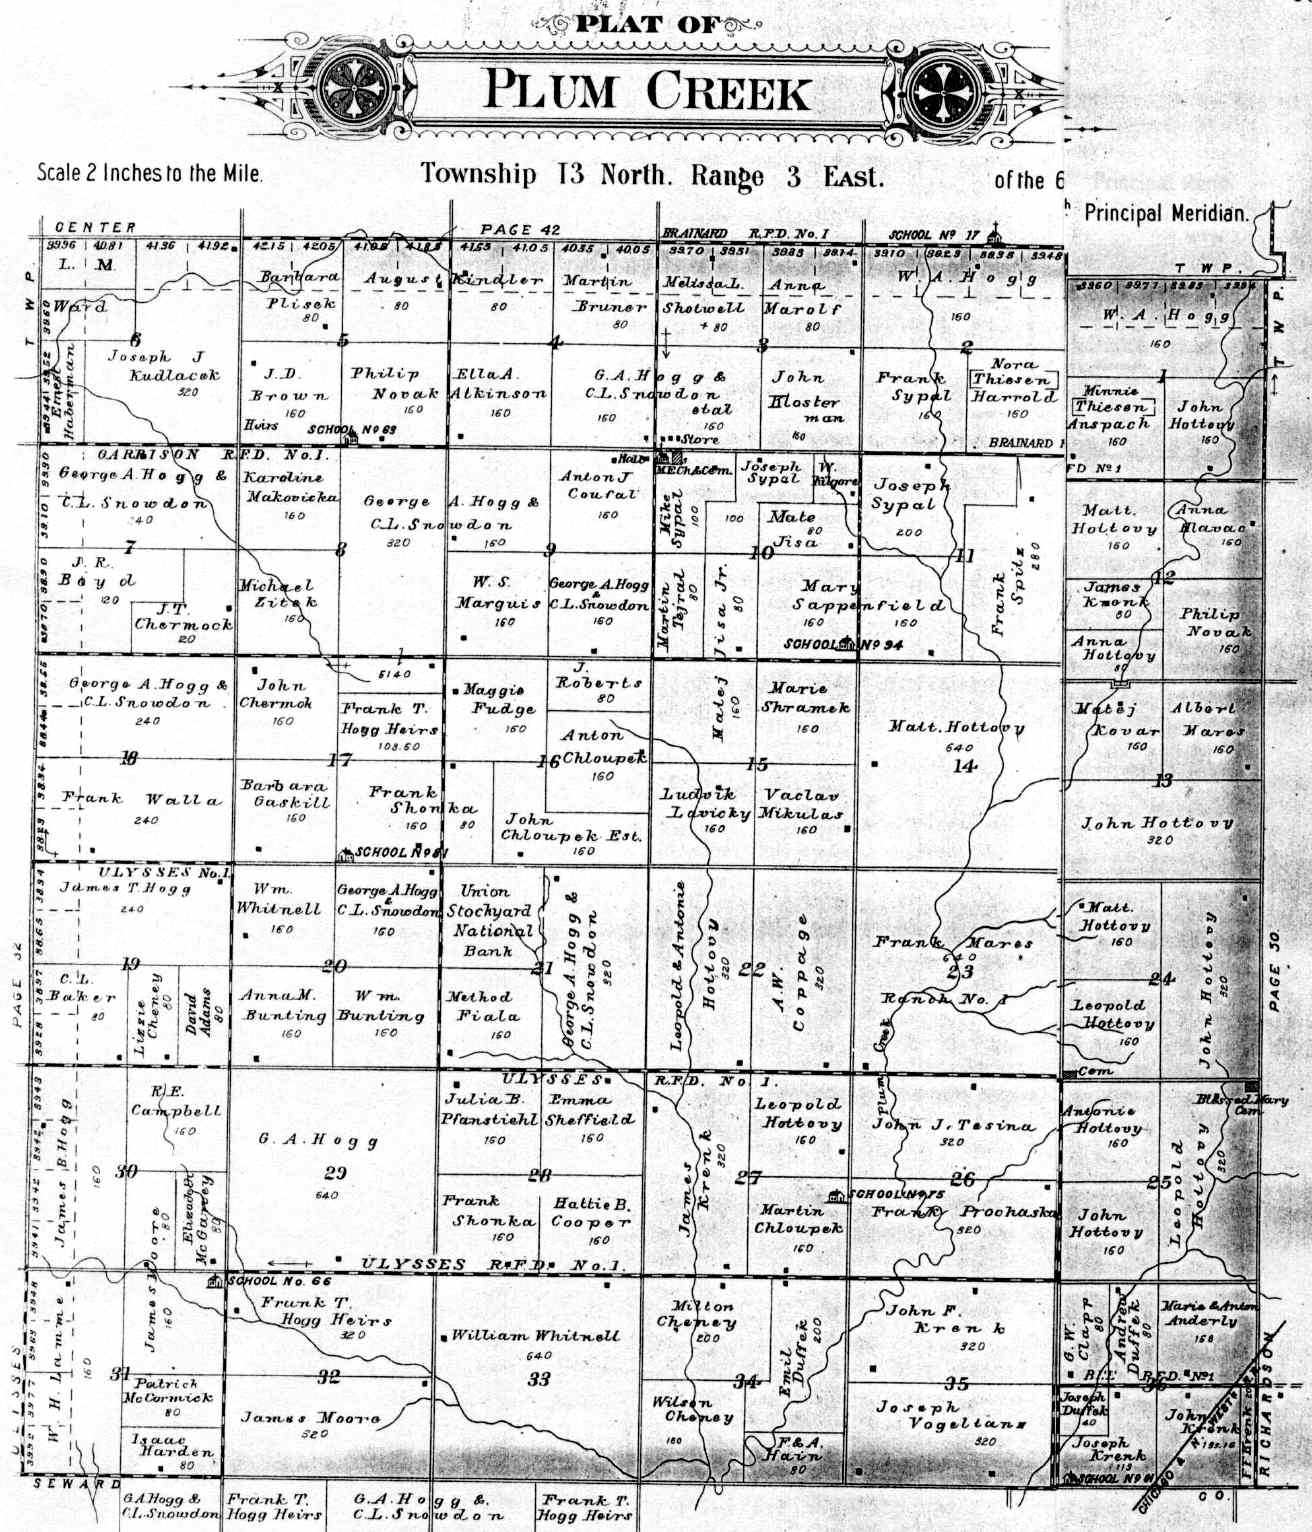 Plum Creek Township Butler County Nebraska Plat Map for 1906